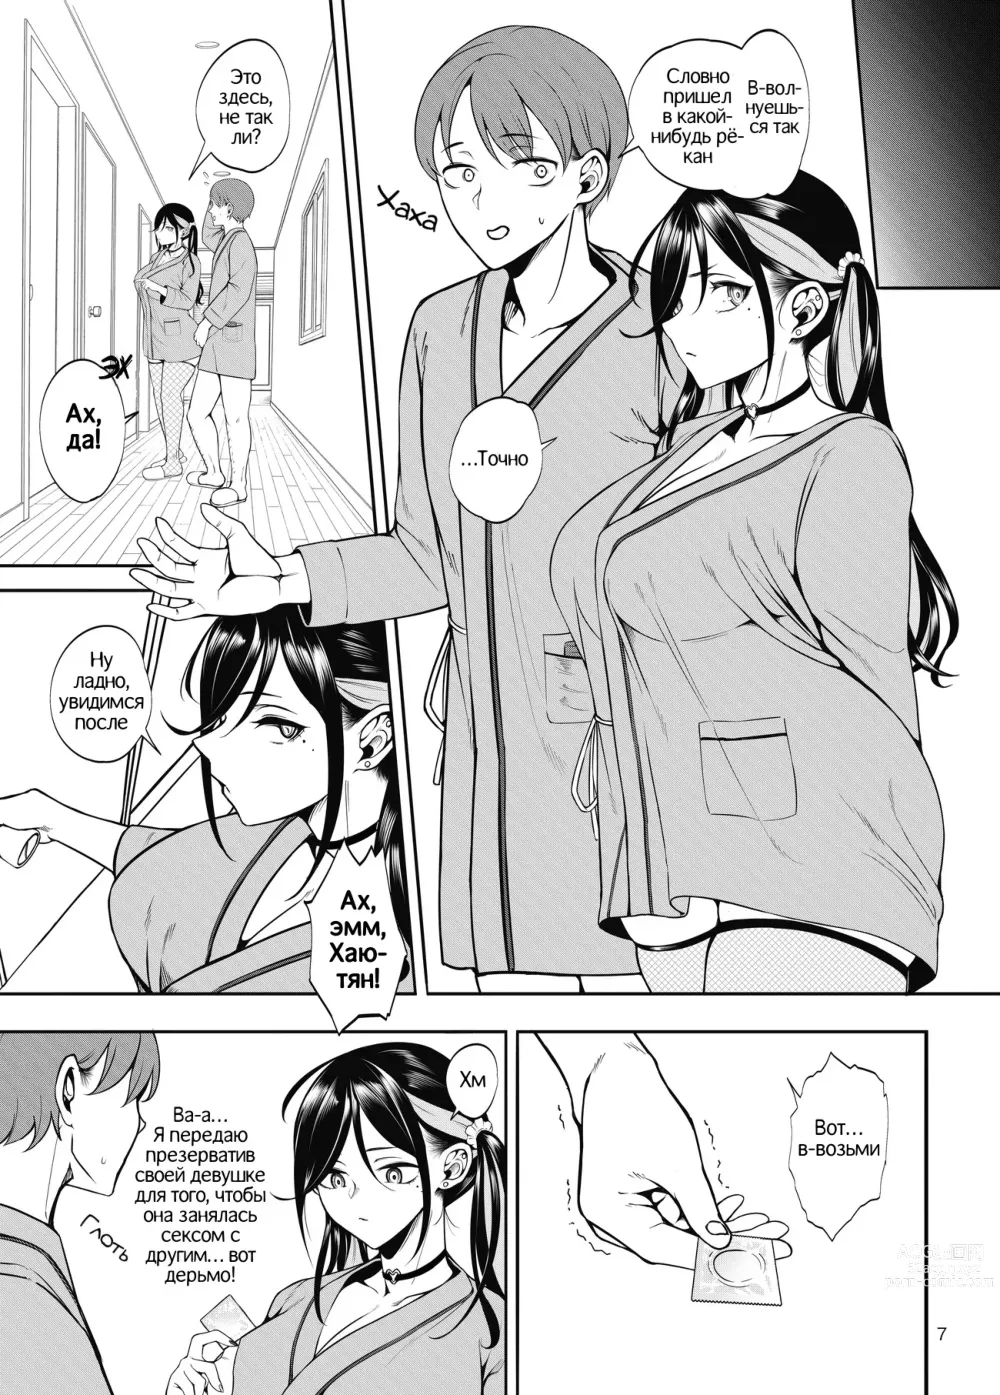 Page 8 of doujinshi Мне не стоило приводить девушку в салон куколдских секс-услуг